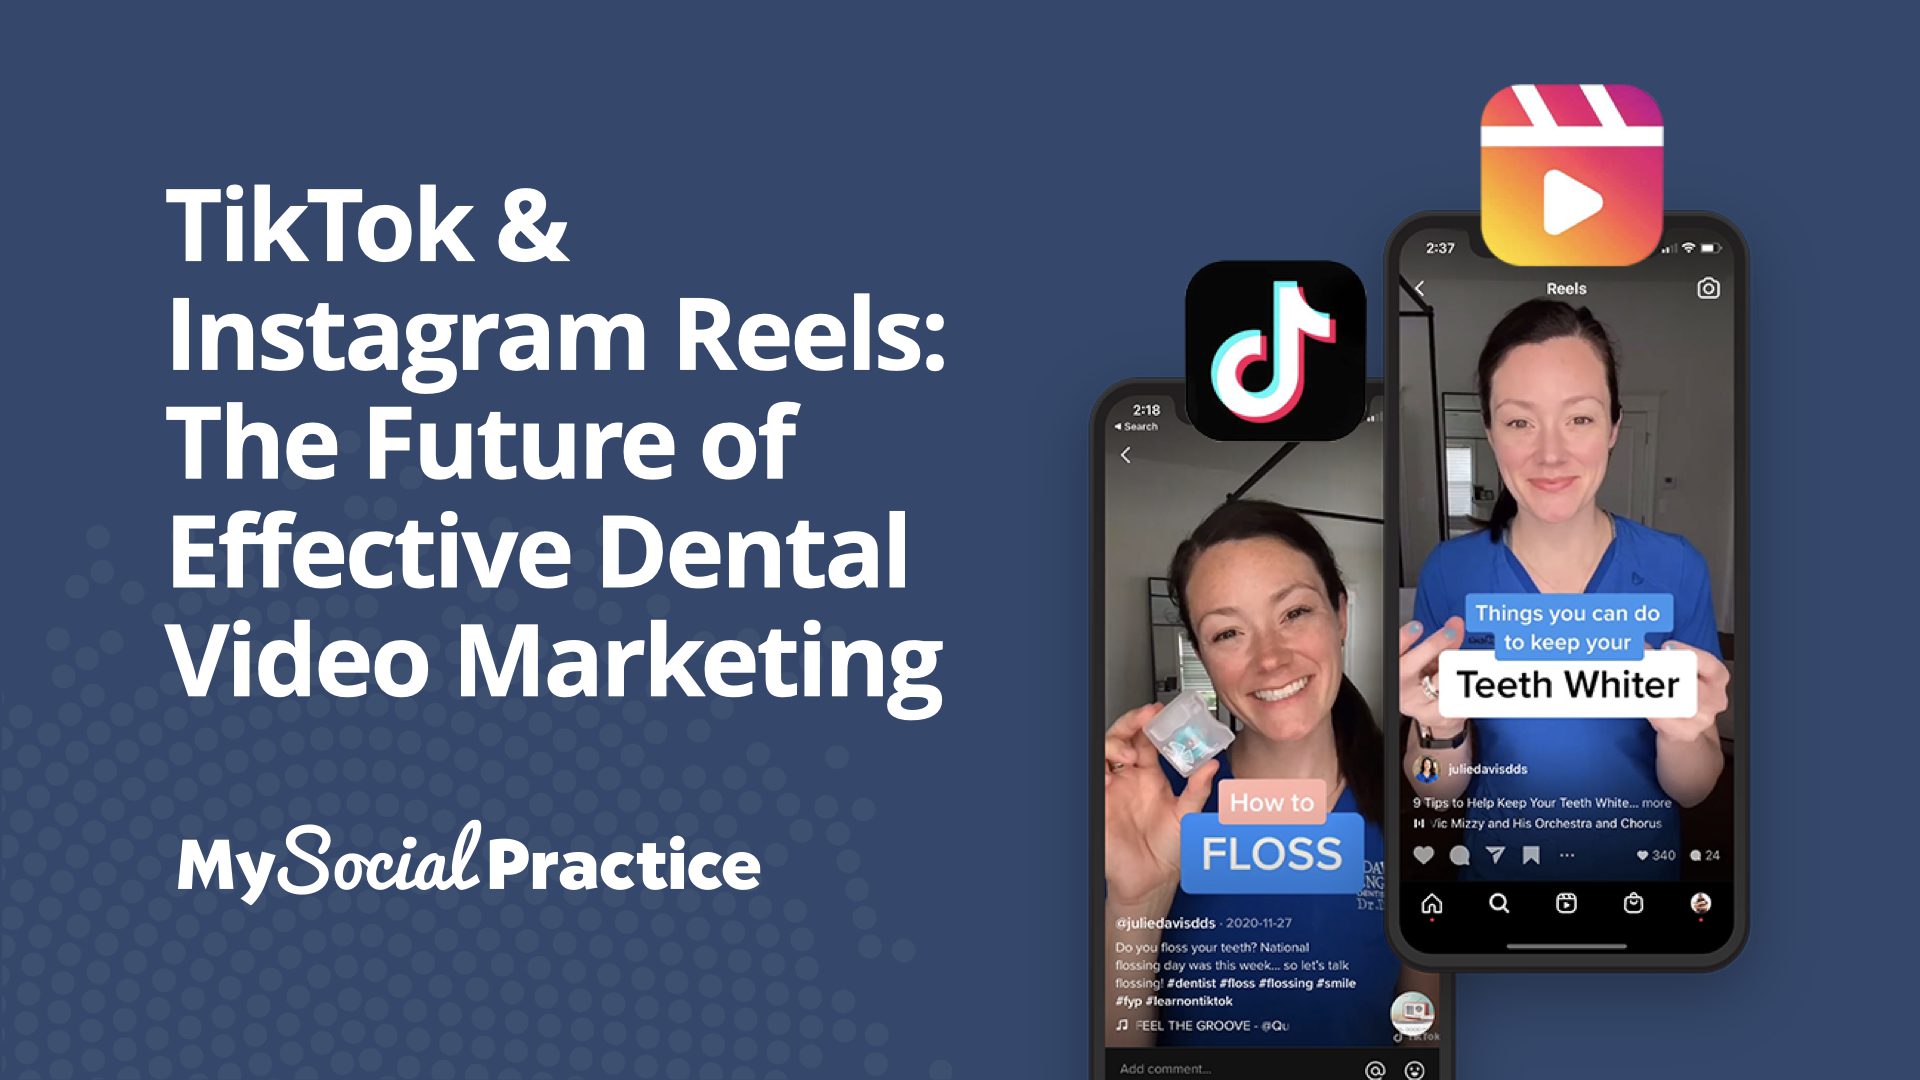 My Social Practice - Social Media Marketing for Dental & Dental Specialty Practices - dental video marketing